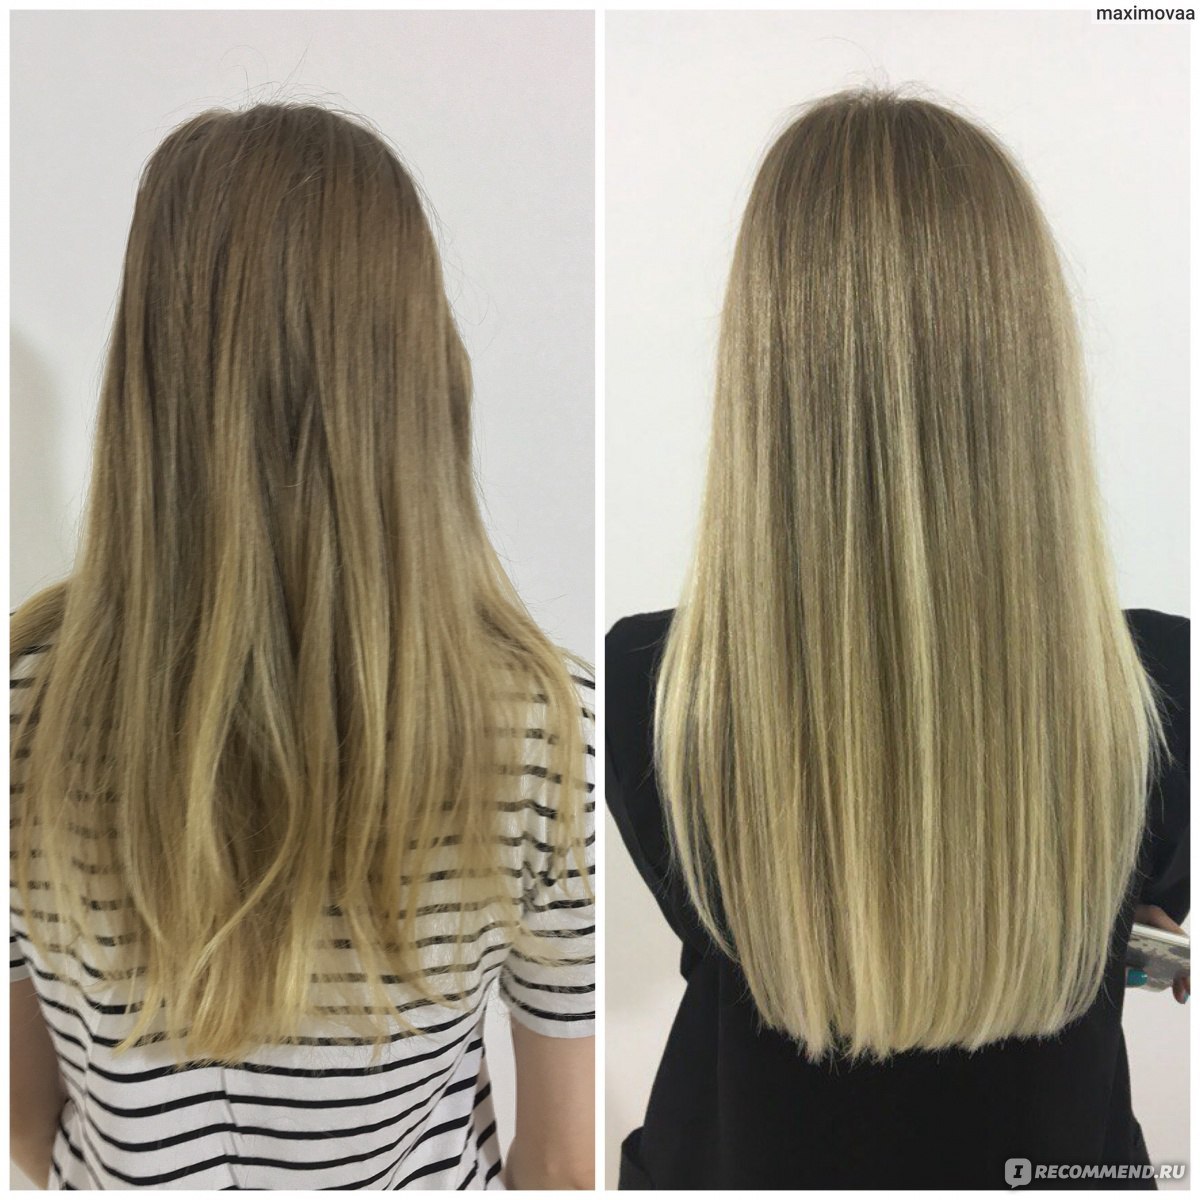 Артач техника окрашивания фото до и после на короткие волосы